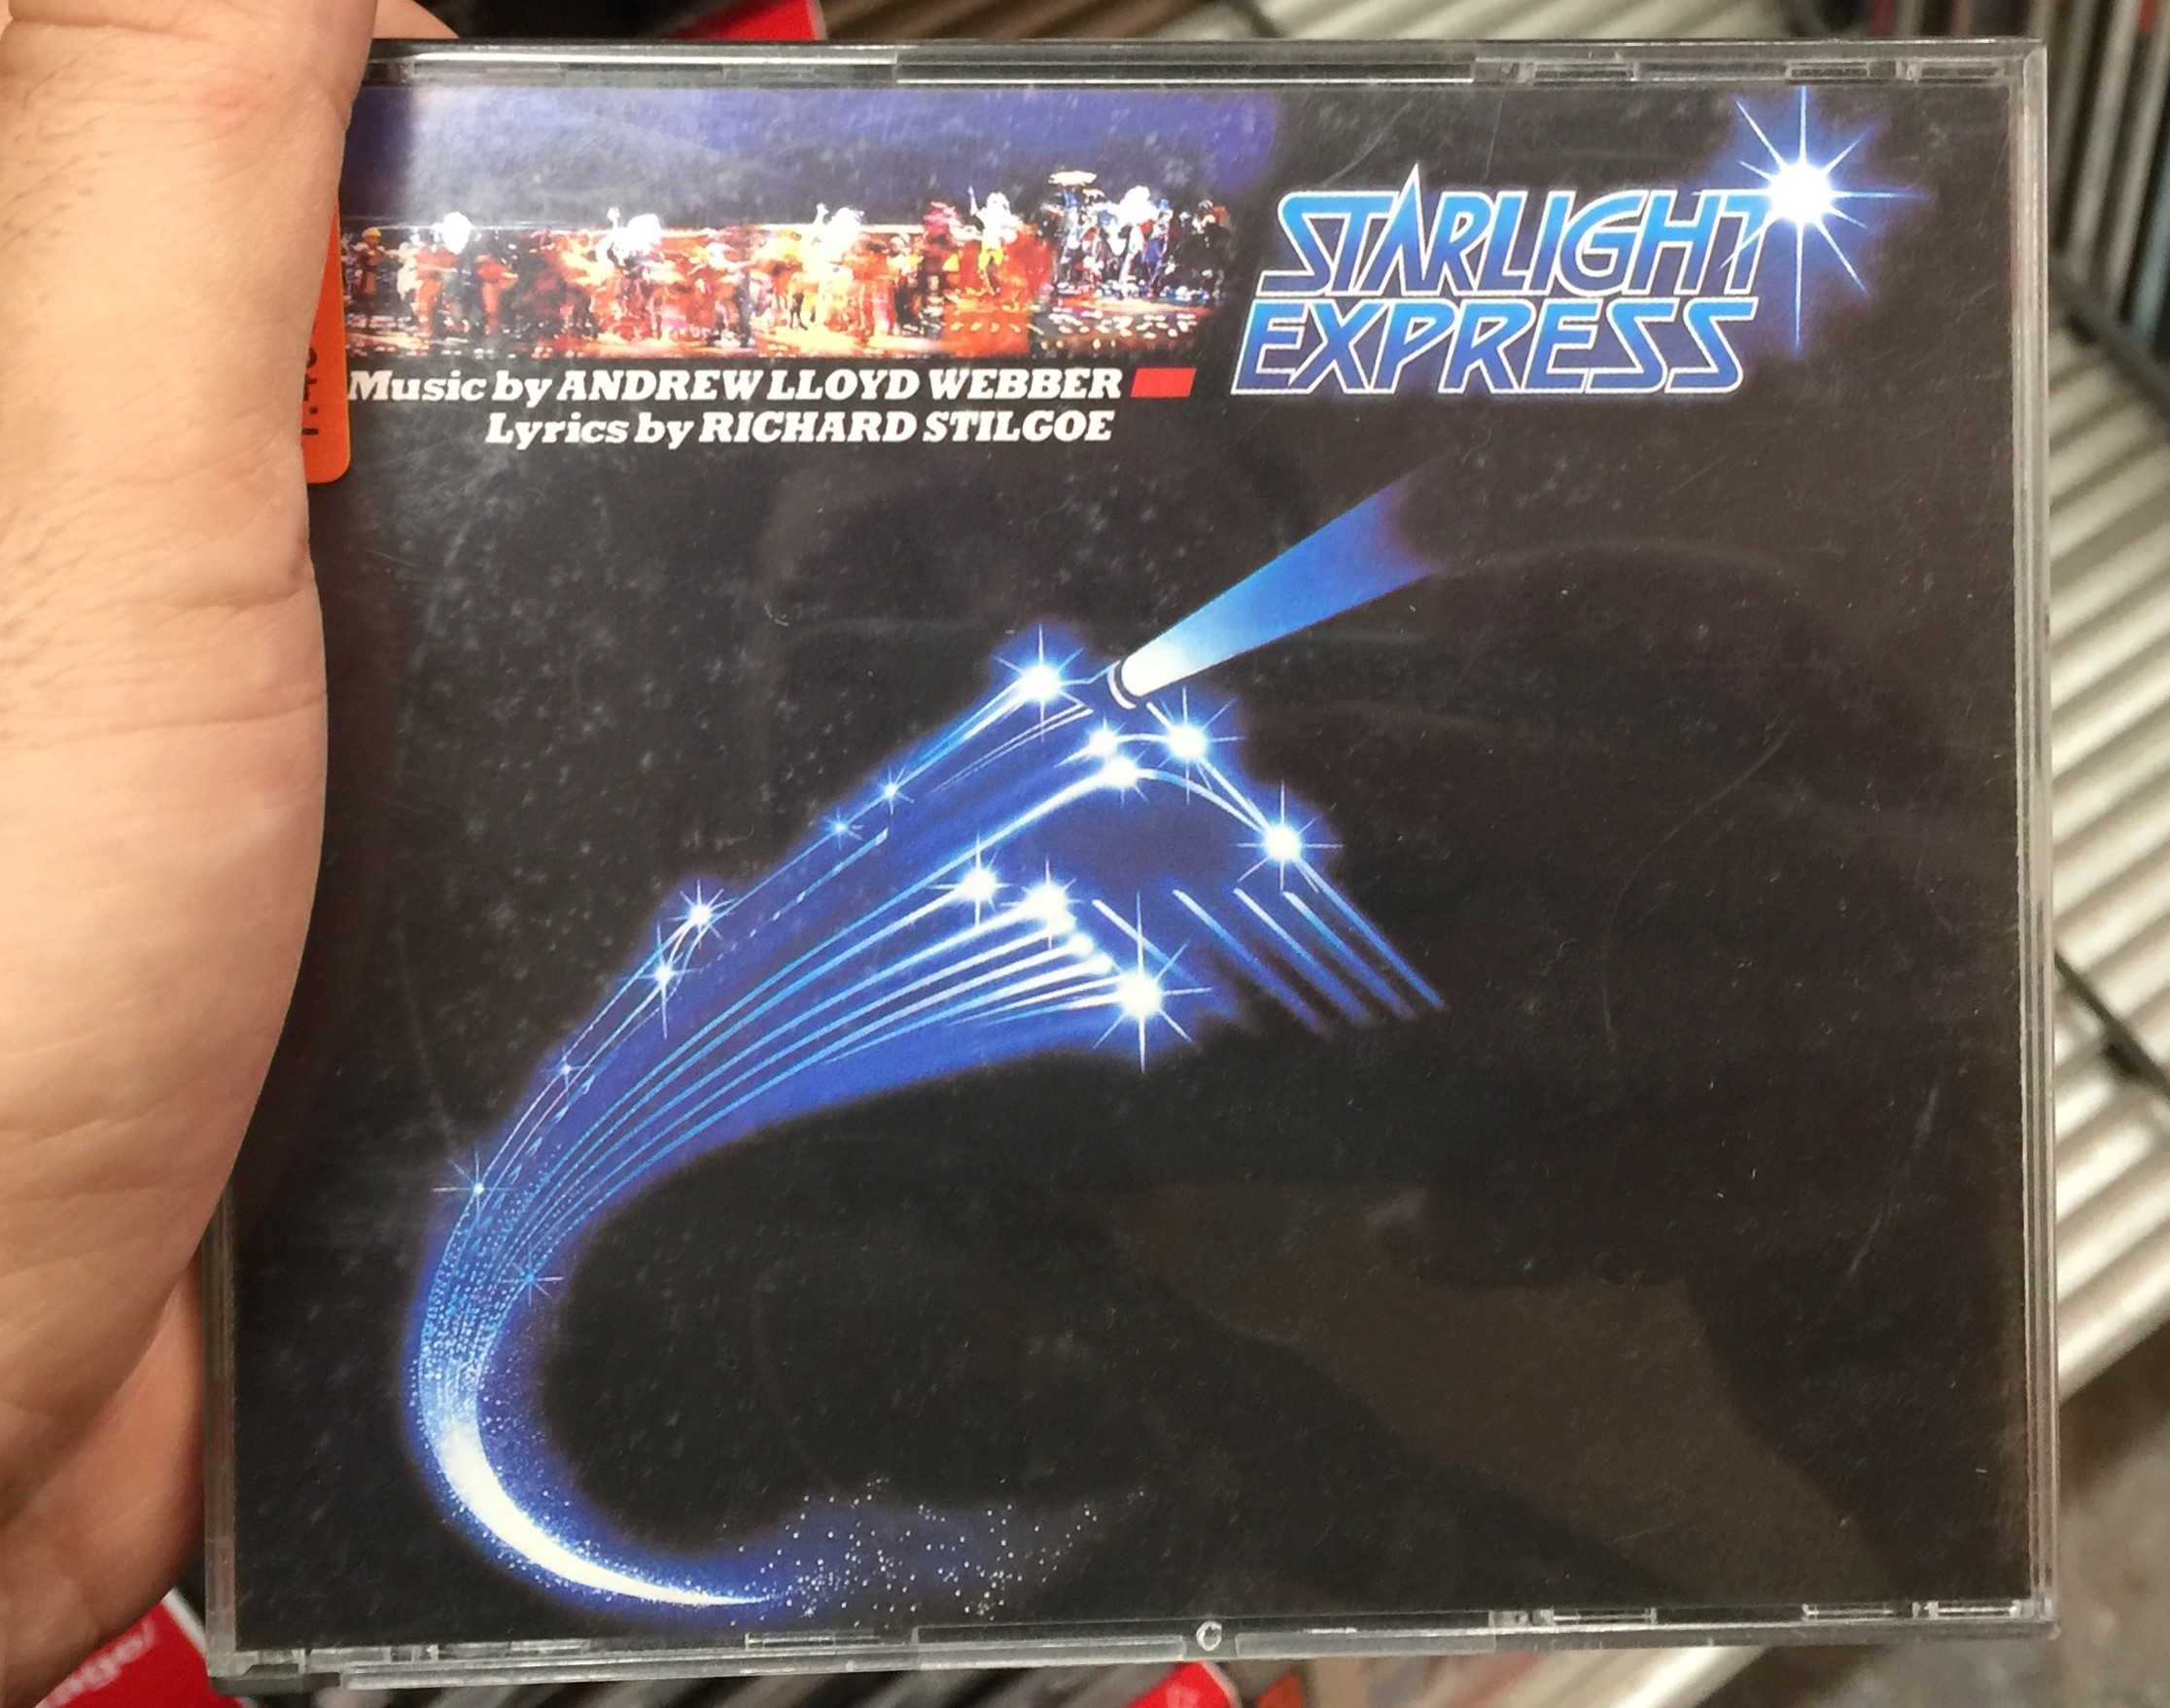 starlight-express-music-by-andrew-lloyd-webber-lyrics-by-richard-stilgoe-polydor-2x-audio-cd-1984-042282159724-1-.jpg